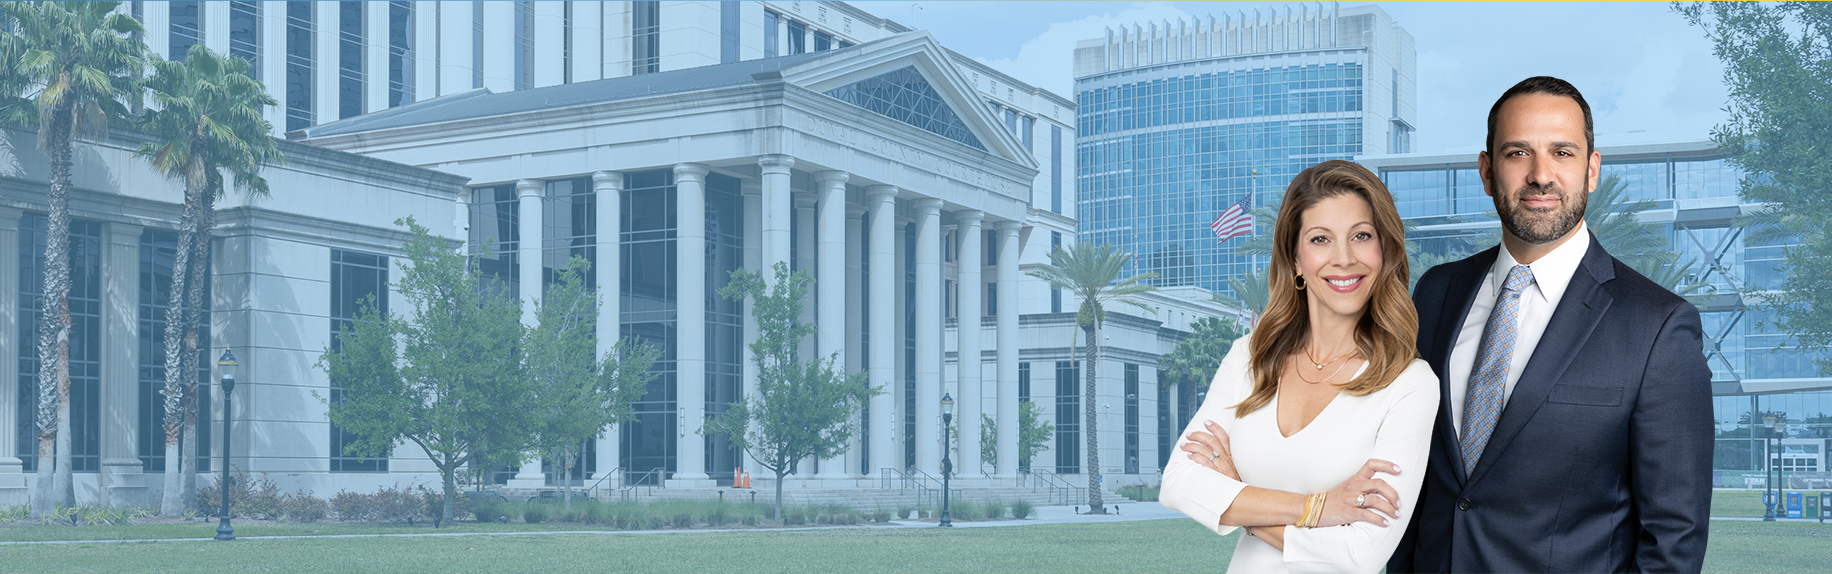 Baggett Law Personal Injury Lawyers - Injury Law Firm in Jacksonville, FL